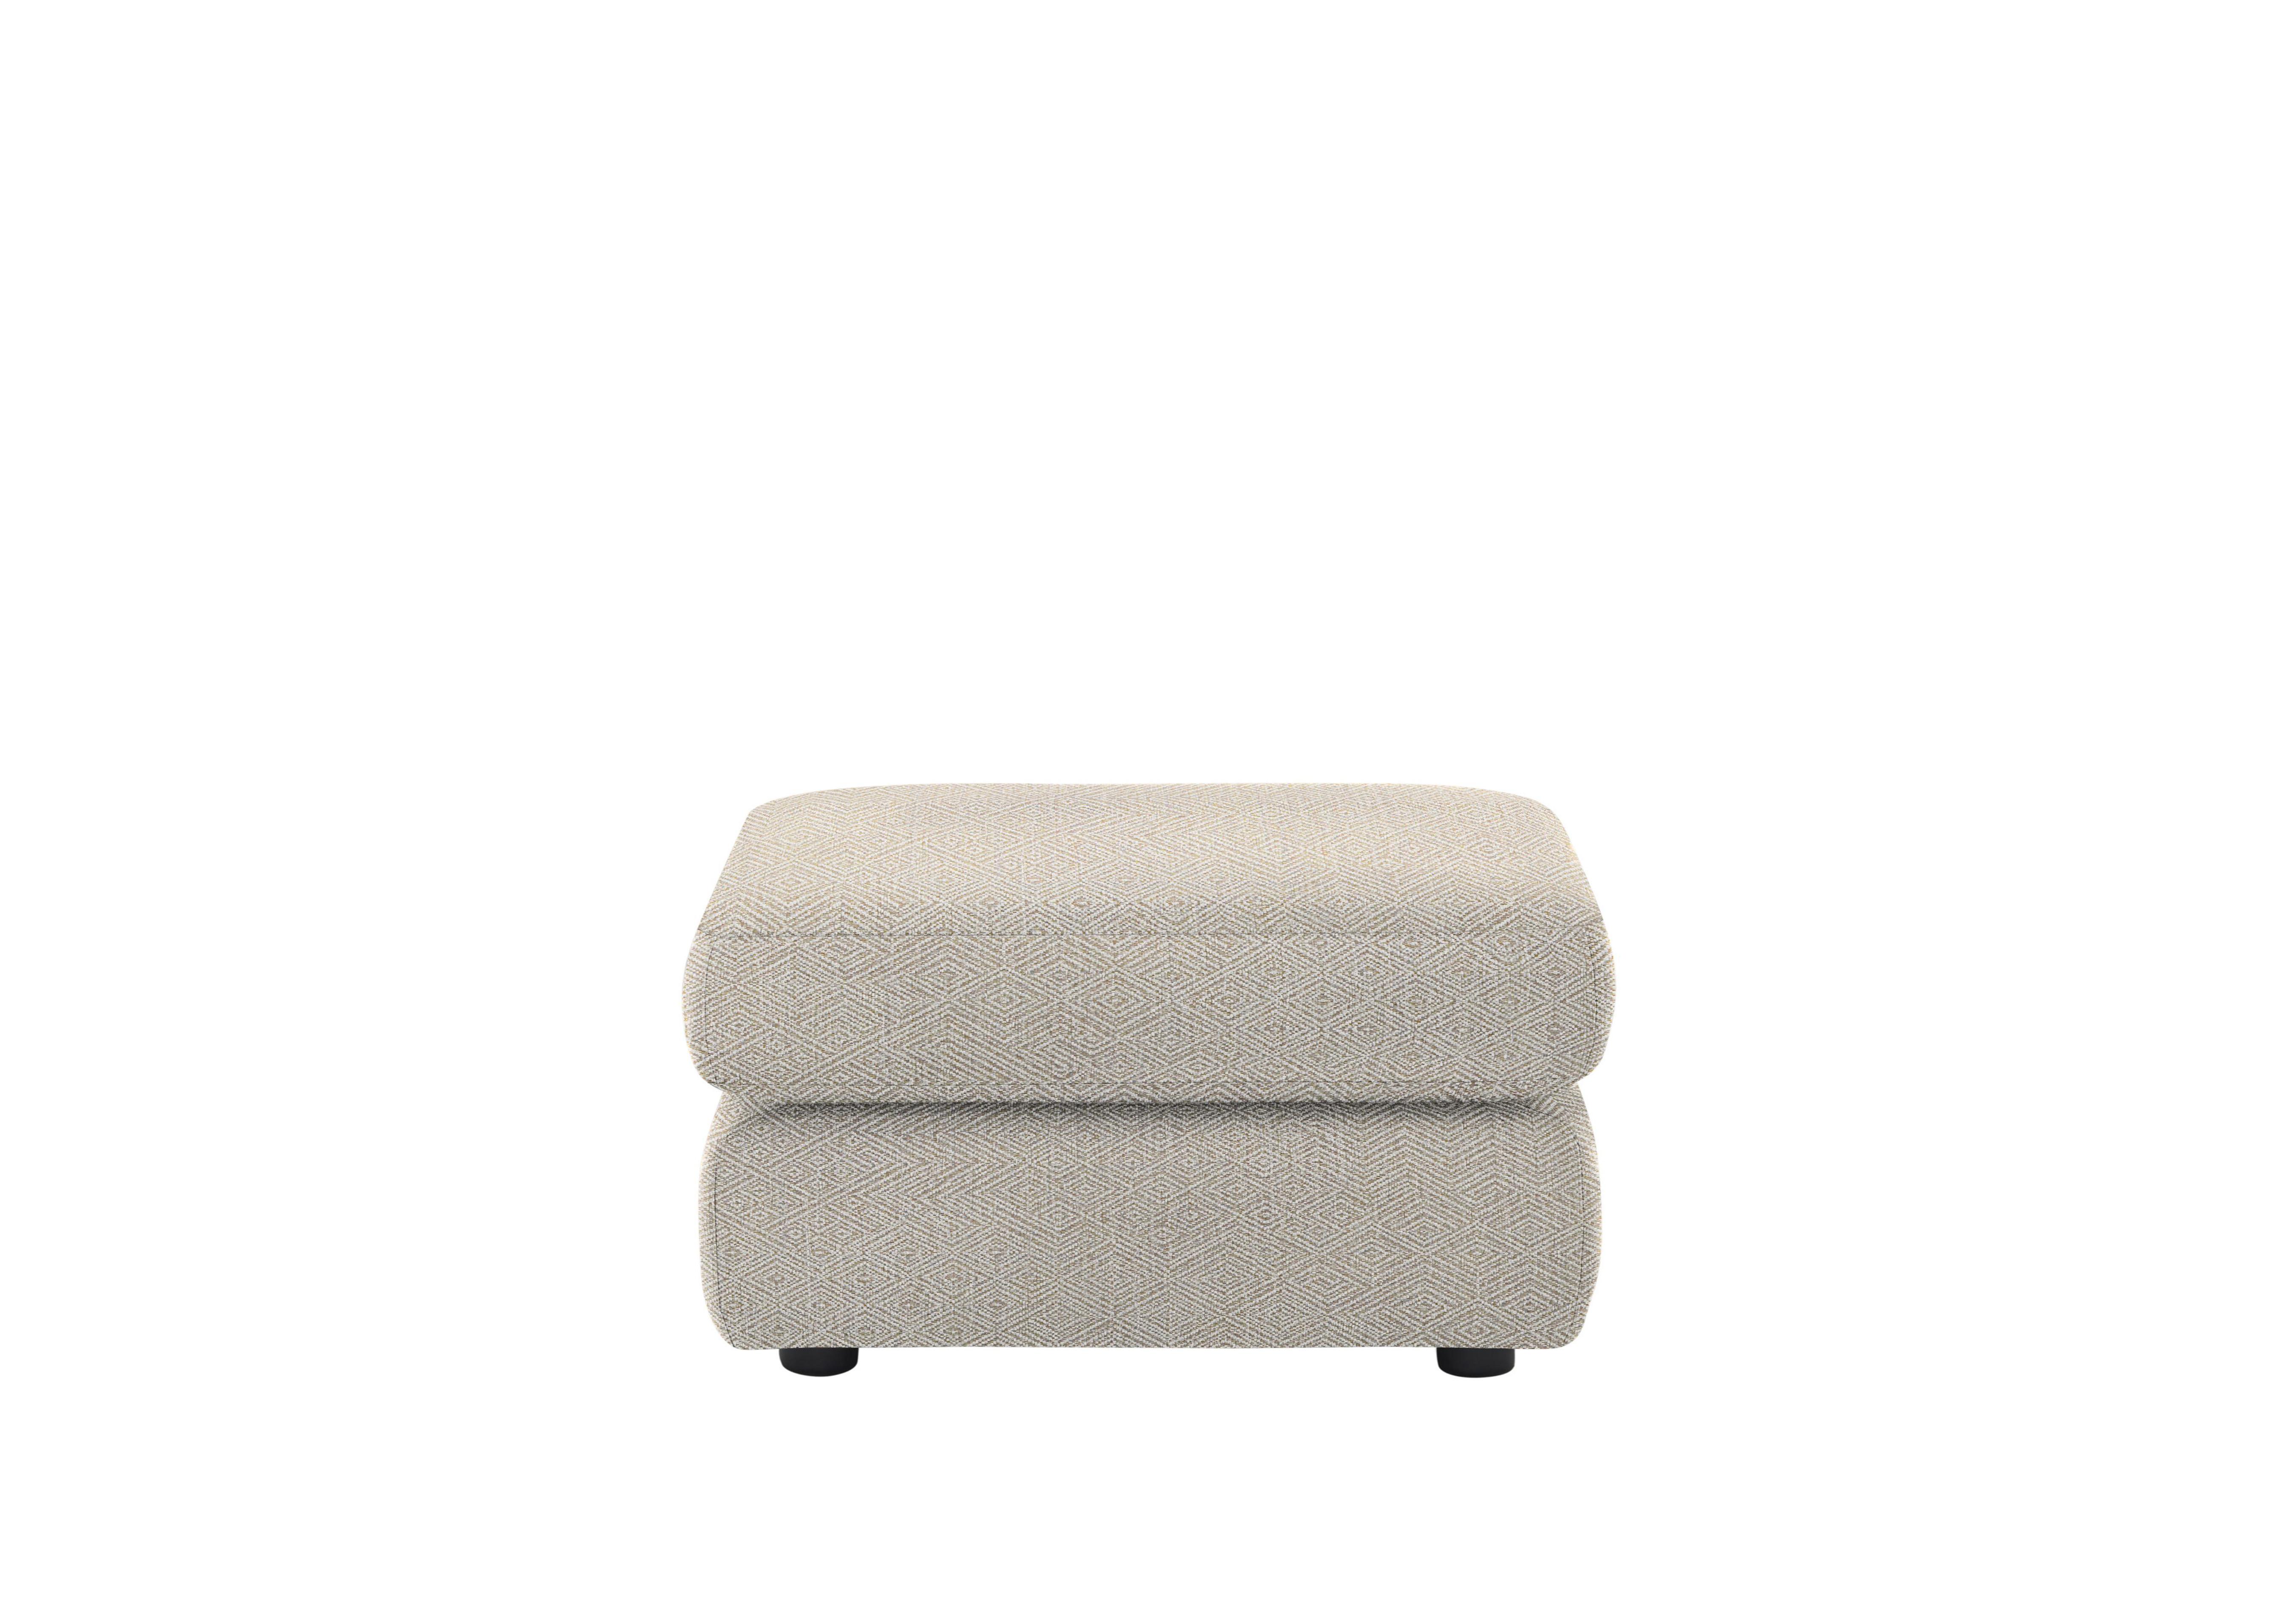 Avon Fabric Storage Footstool in B011 Nebular Blush on Furniture Village